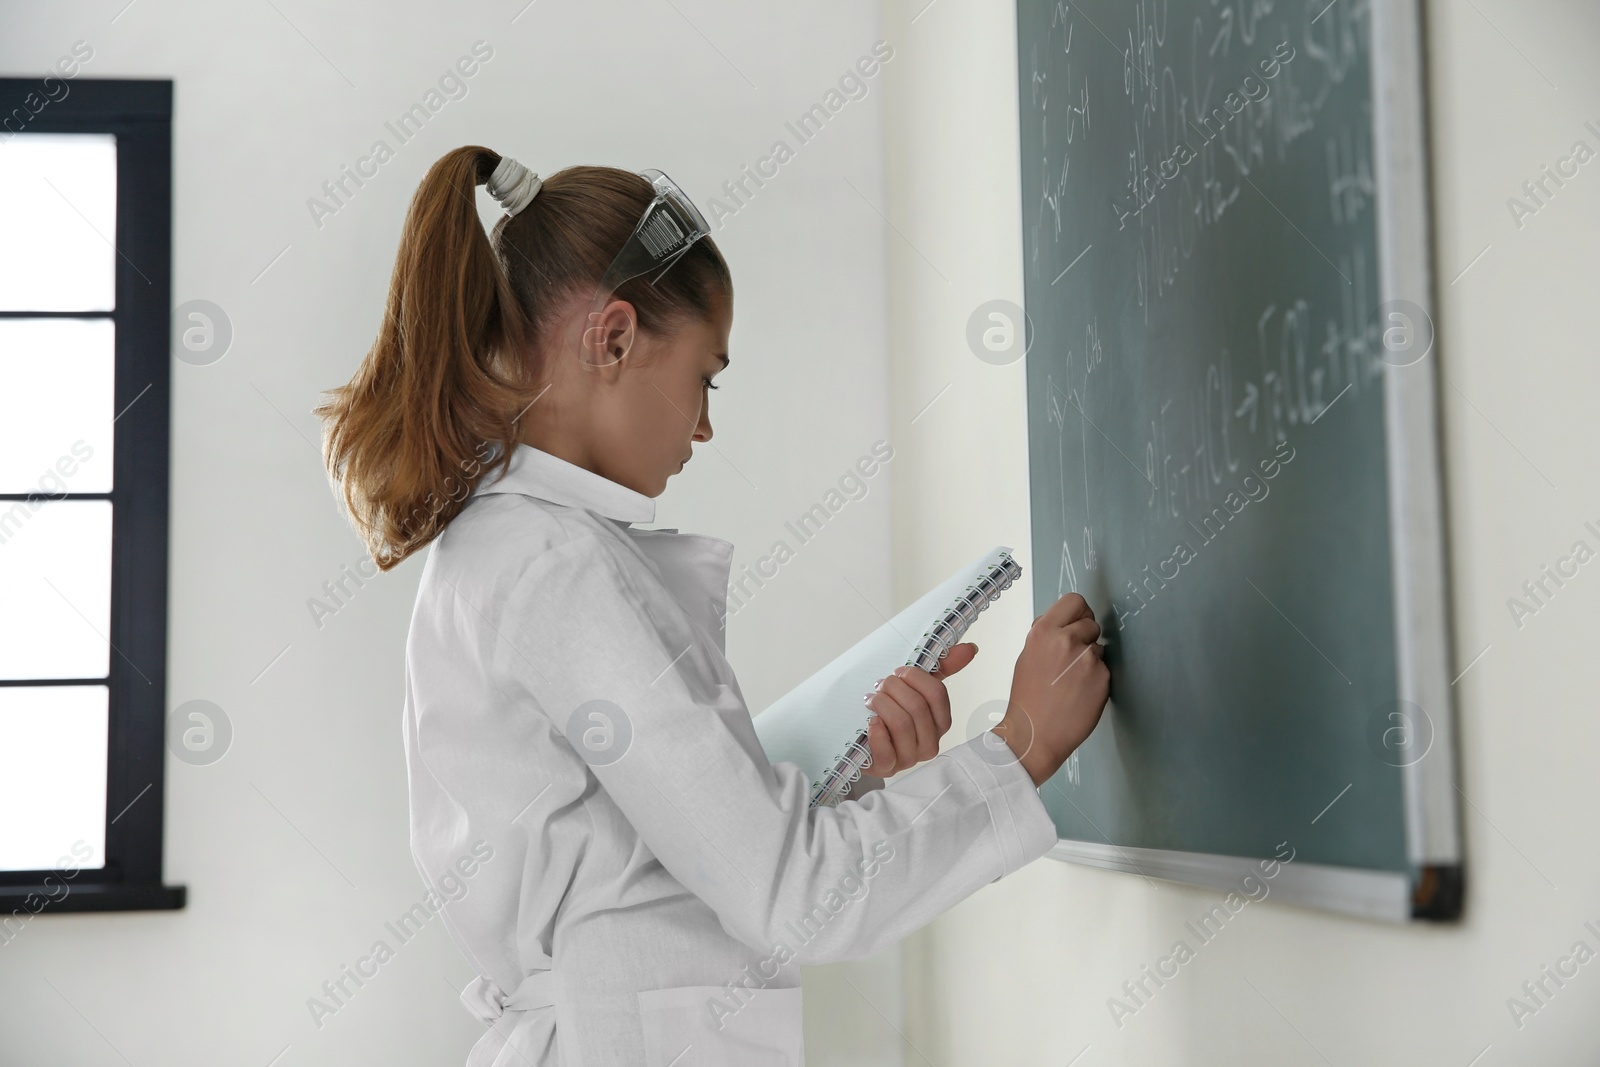 Photo of Schoolgirl writing chemistry formula on blackboard in class